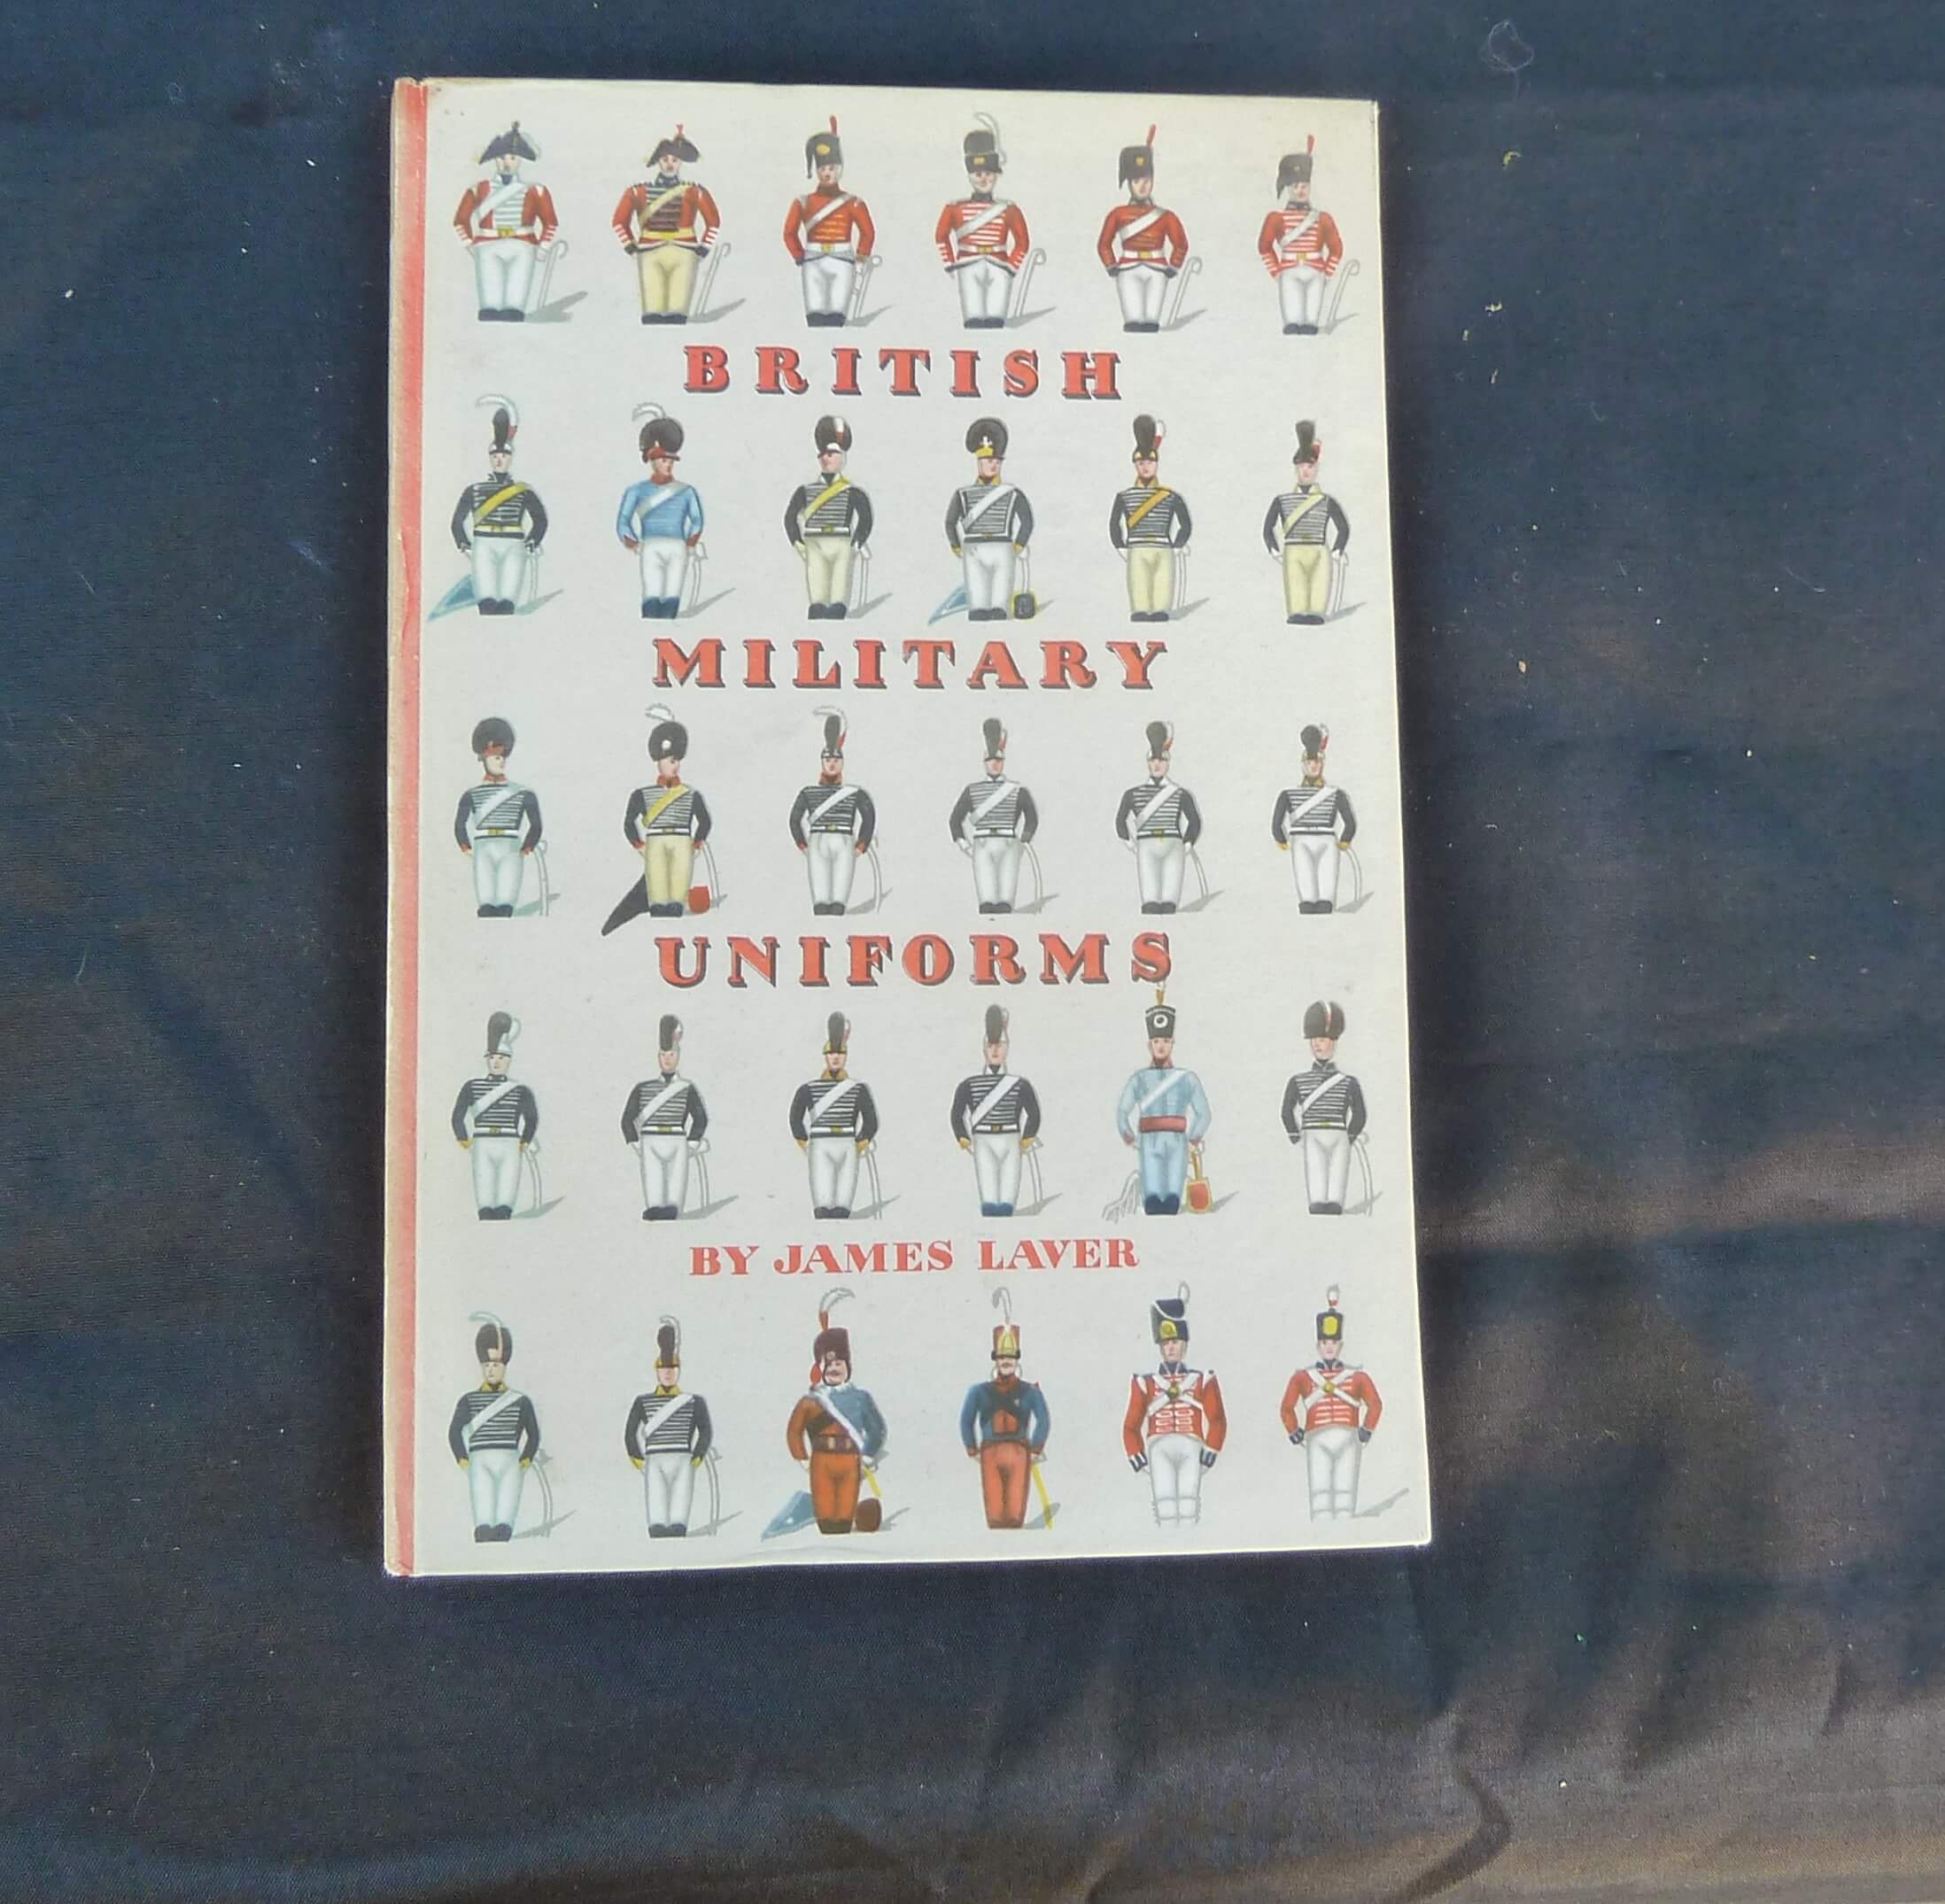 British military uniforms